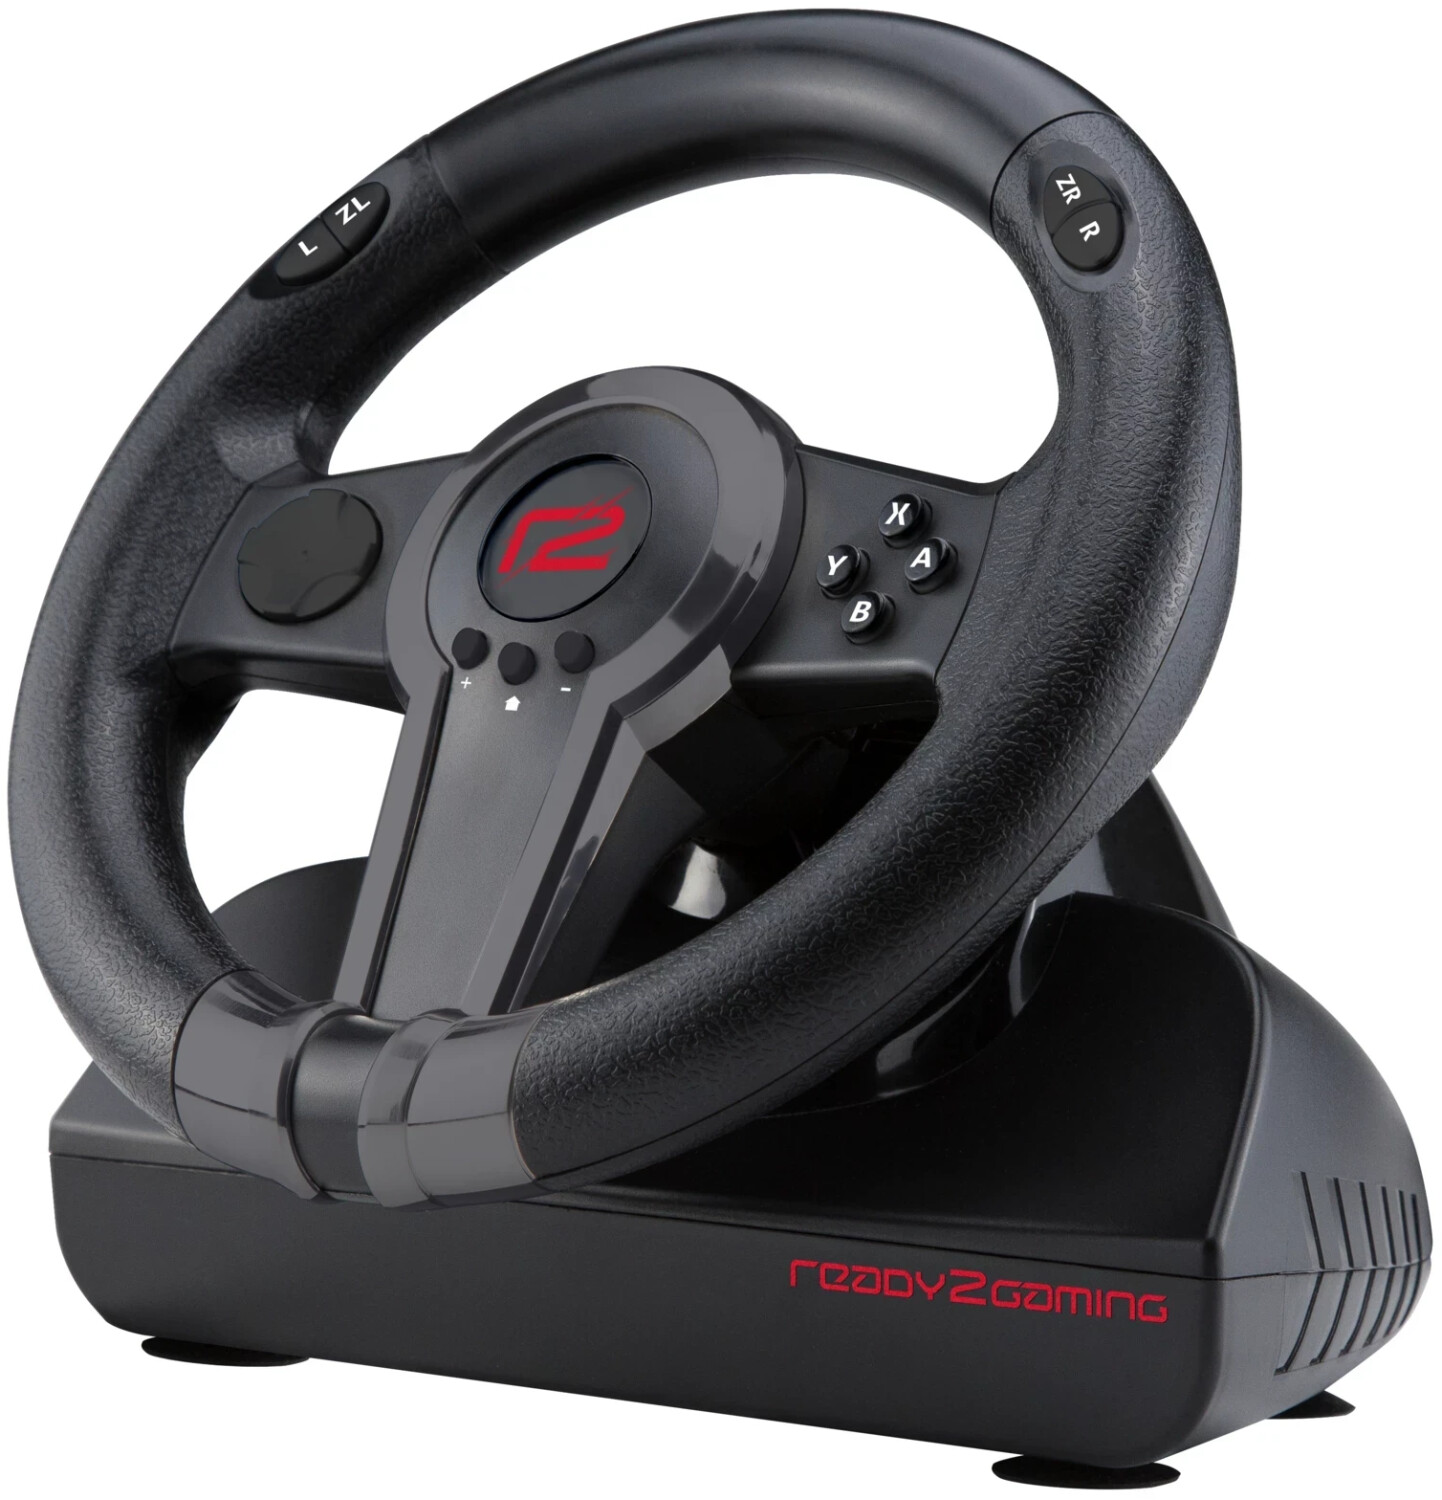 https://cdn.idealo.com/folder/Product/200876/3/200876349/s1_produktbild_max_2/ready2gaming-nintendo-switch-steering-wheel.jpg